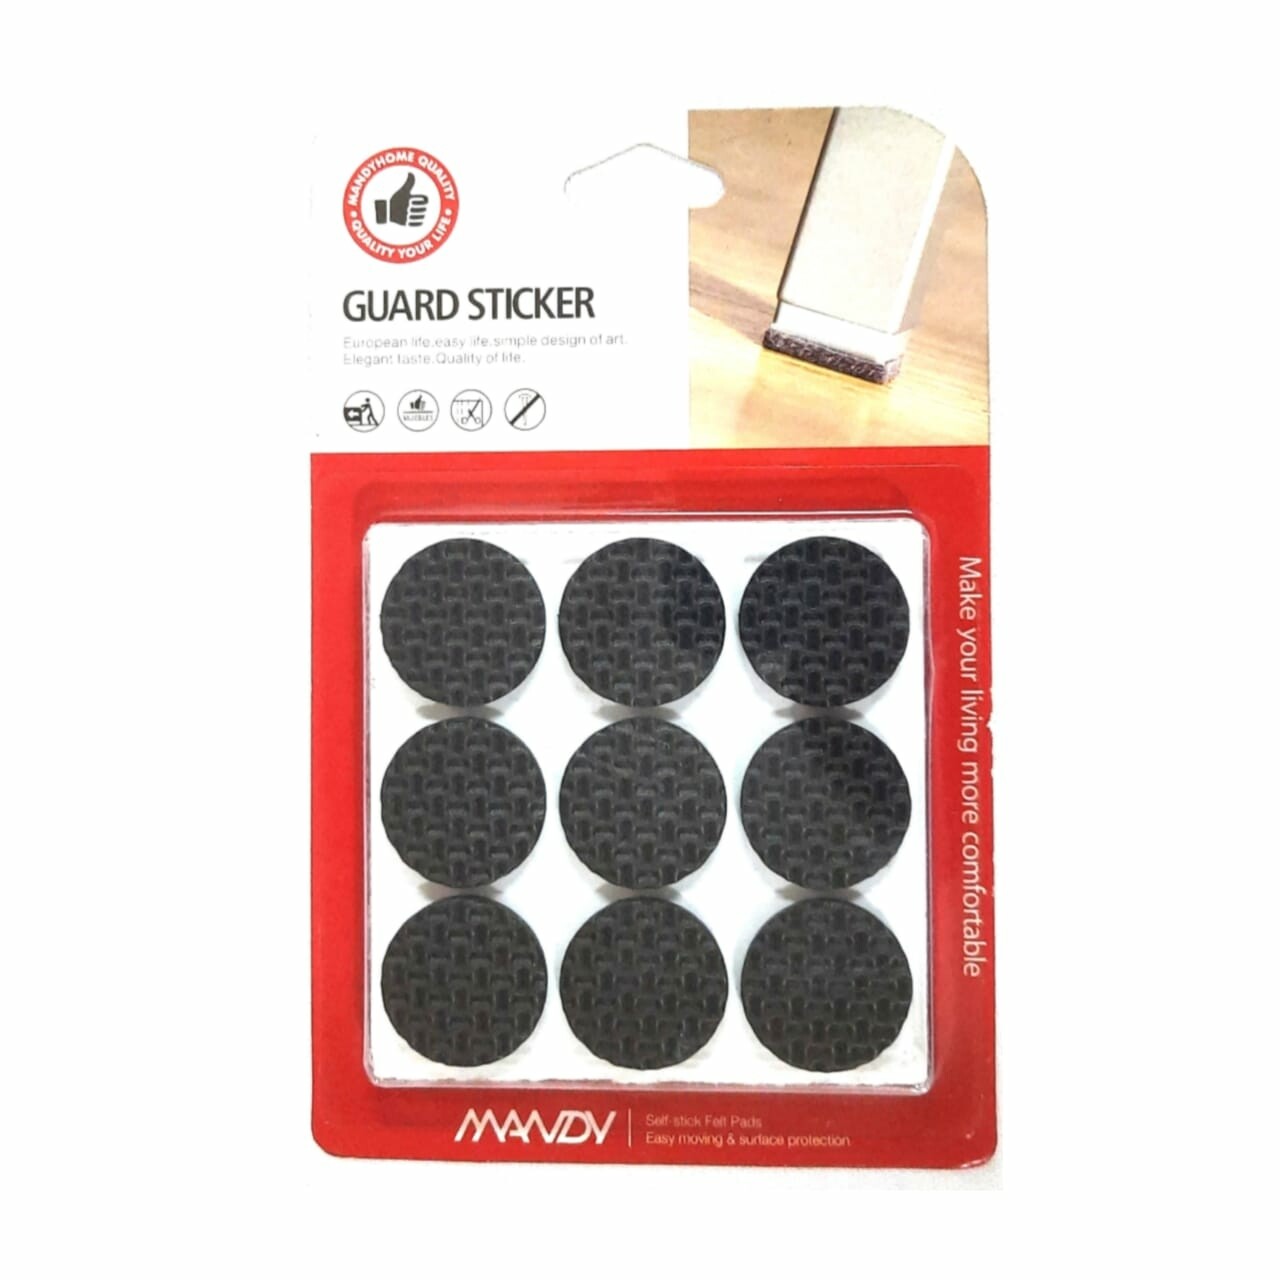 Mandy Heavy Duty Furniture Guard Sticker (Black) -1 Piece (contains 9 guard stickers) - 2.5cm - Round Shape.